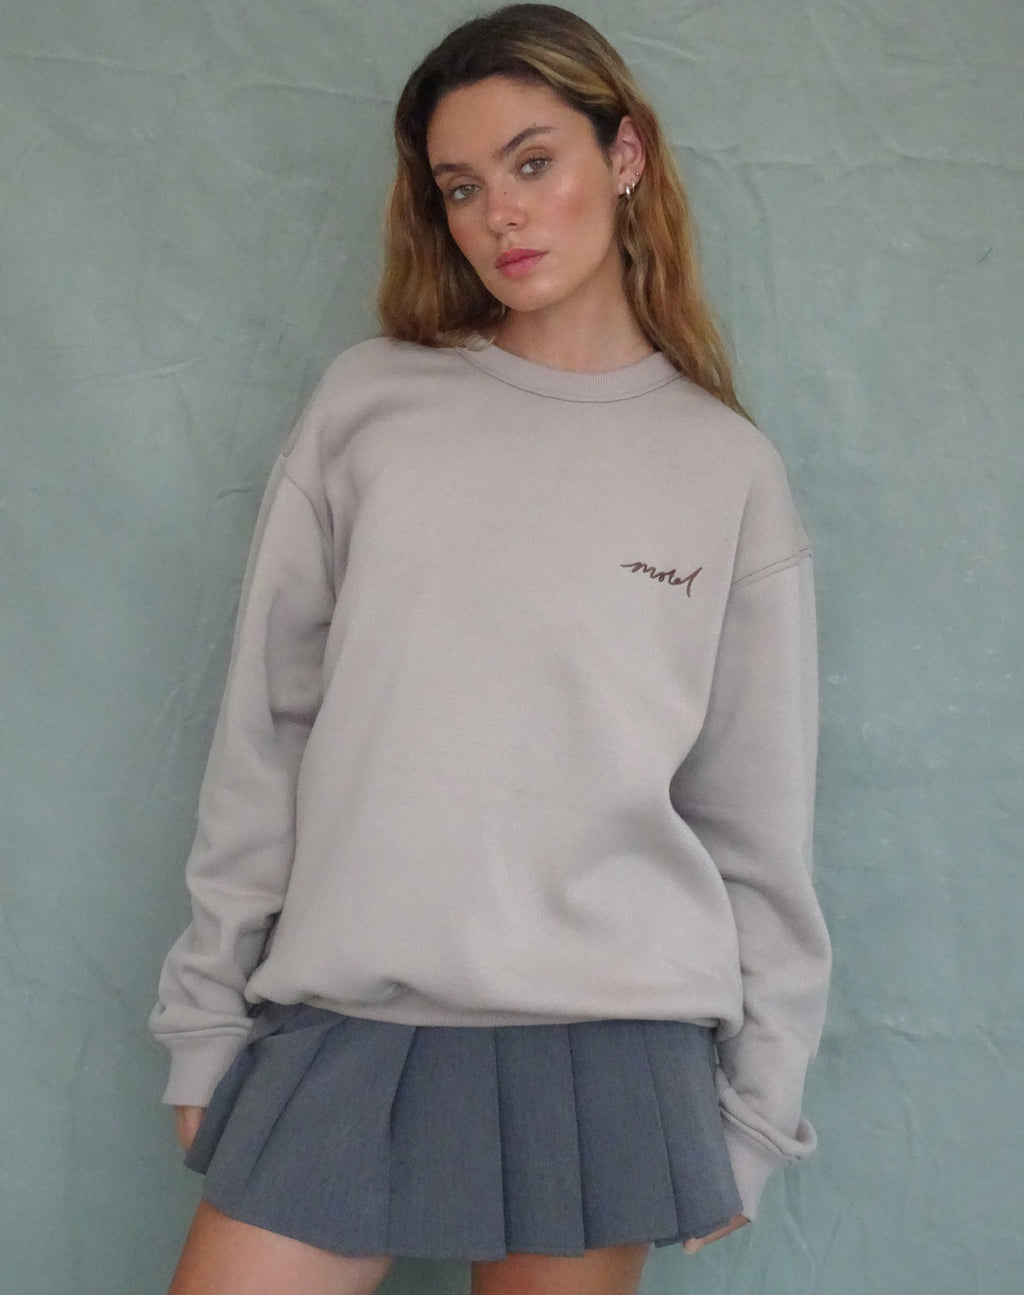 Tillie Sweatshirt in Mushroom with Brown Motel Embroidery